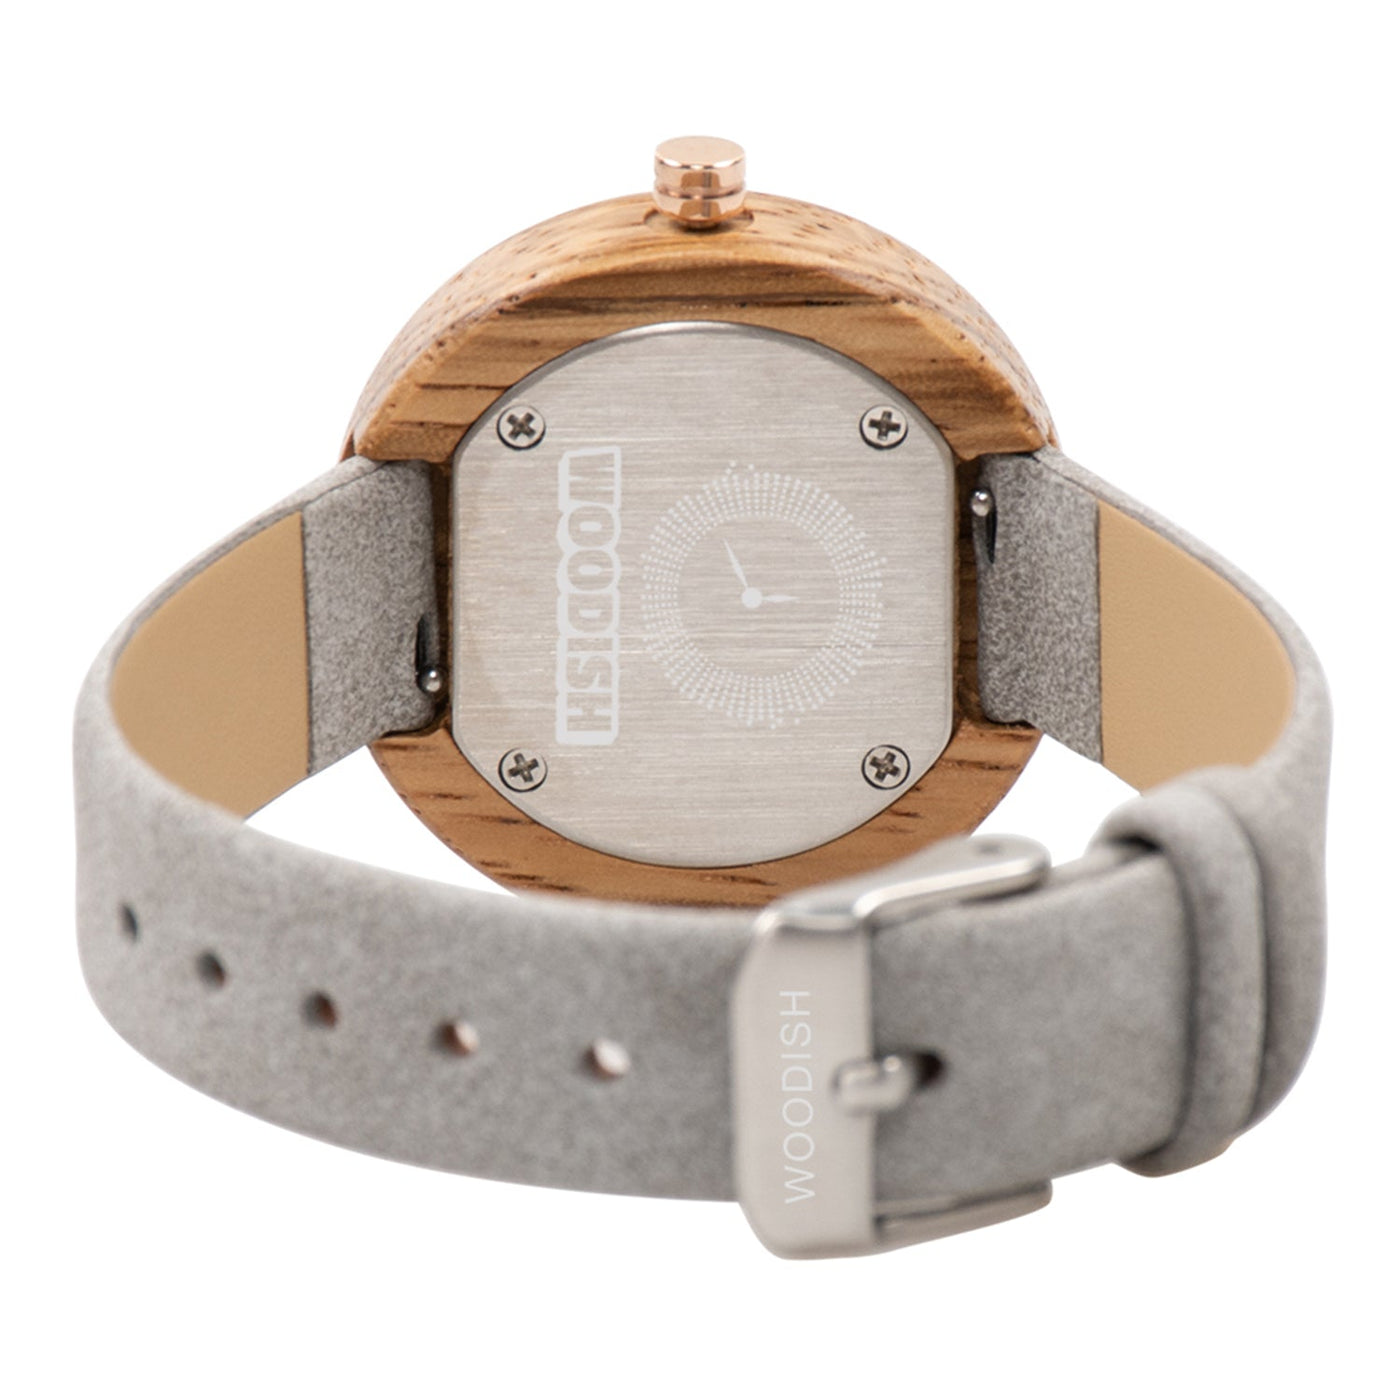 Elegant Wooden Olive Watch for Ladies ZW167-1 Women's watch Free Man 